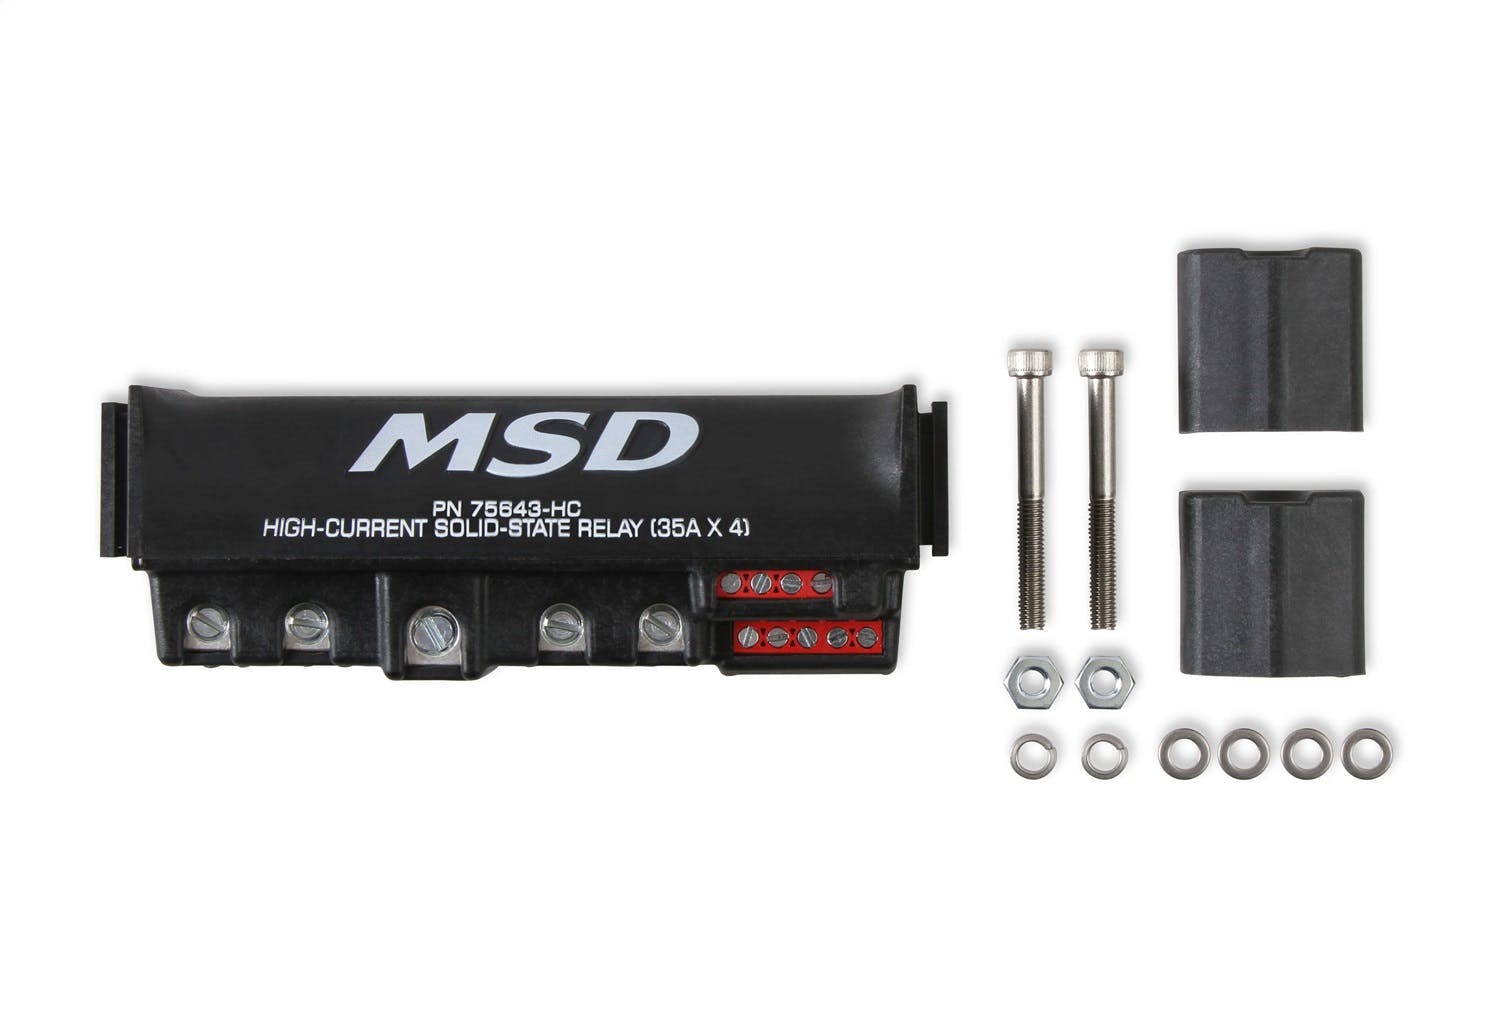 MSD Performance 75643-HC High Current Relay Block